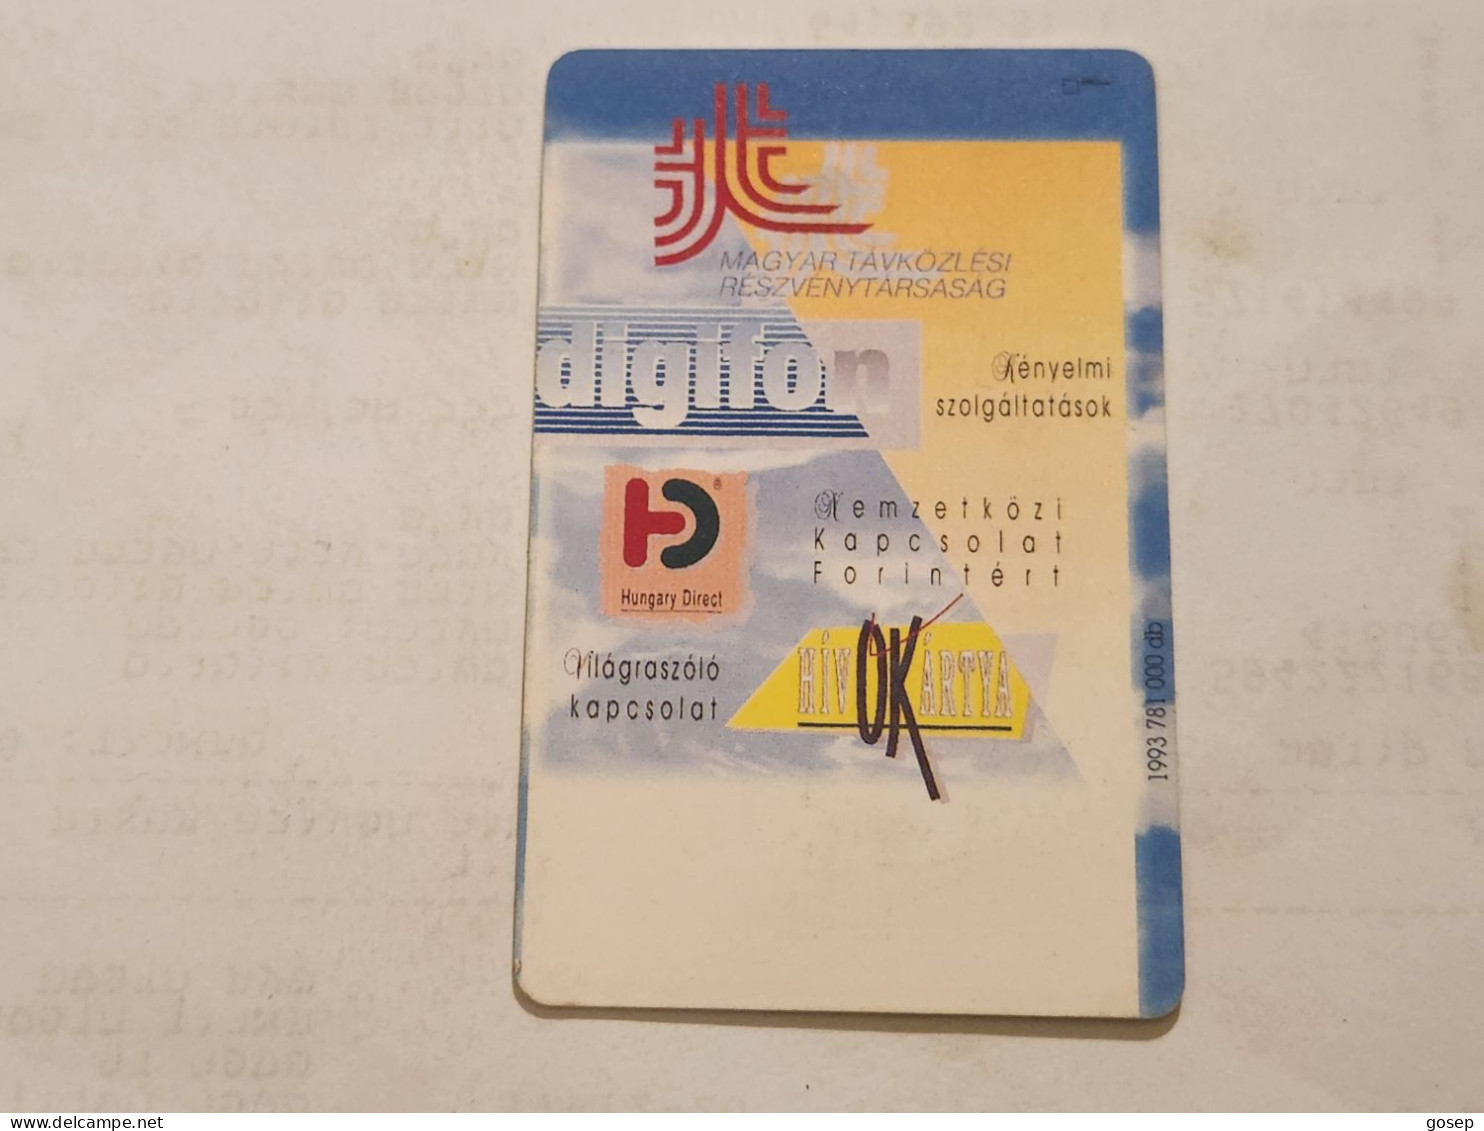 HUNGARY-(HU-P-1993-32Aa)-MATAV-(177)(500units)(11/93)(tirage-781.000)-USED CARD+1card Prepiad Free - Hungría